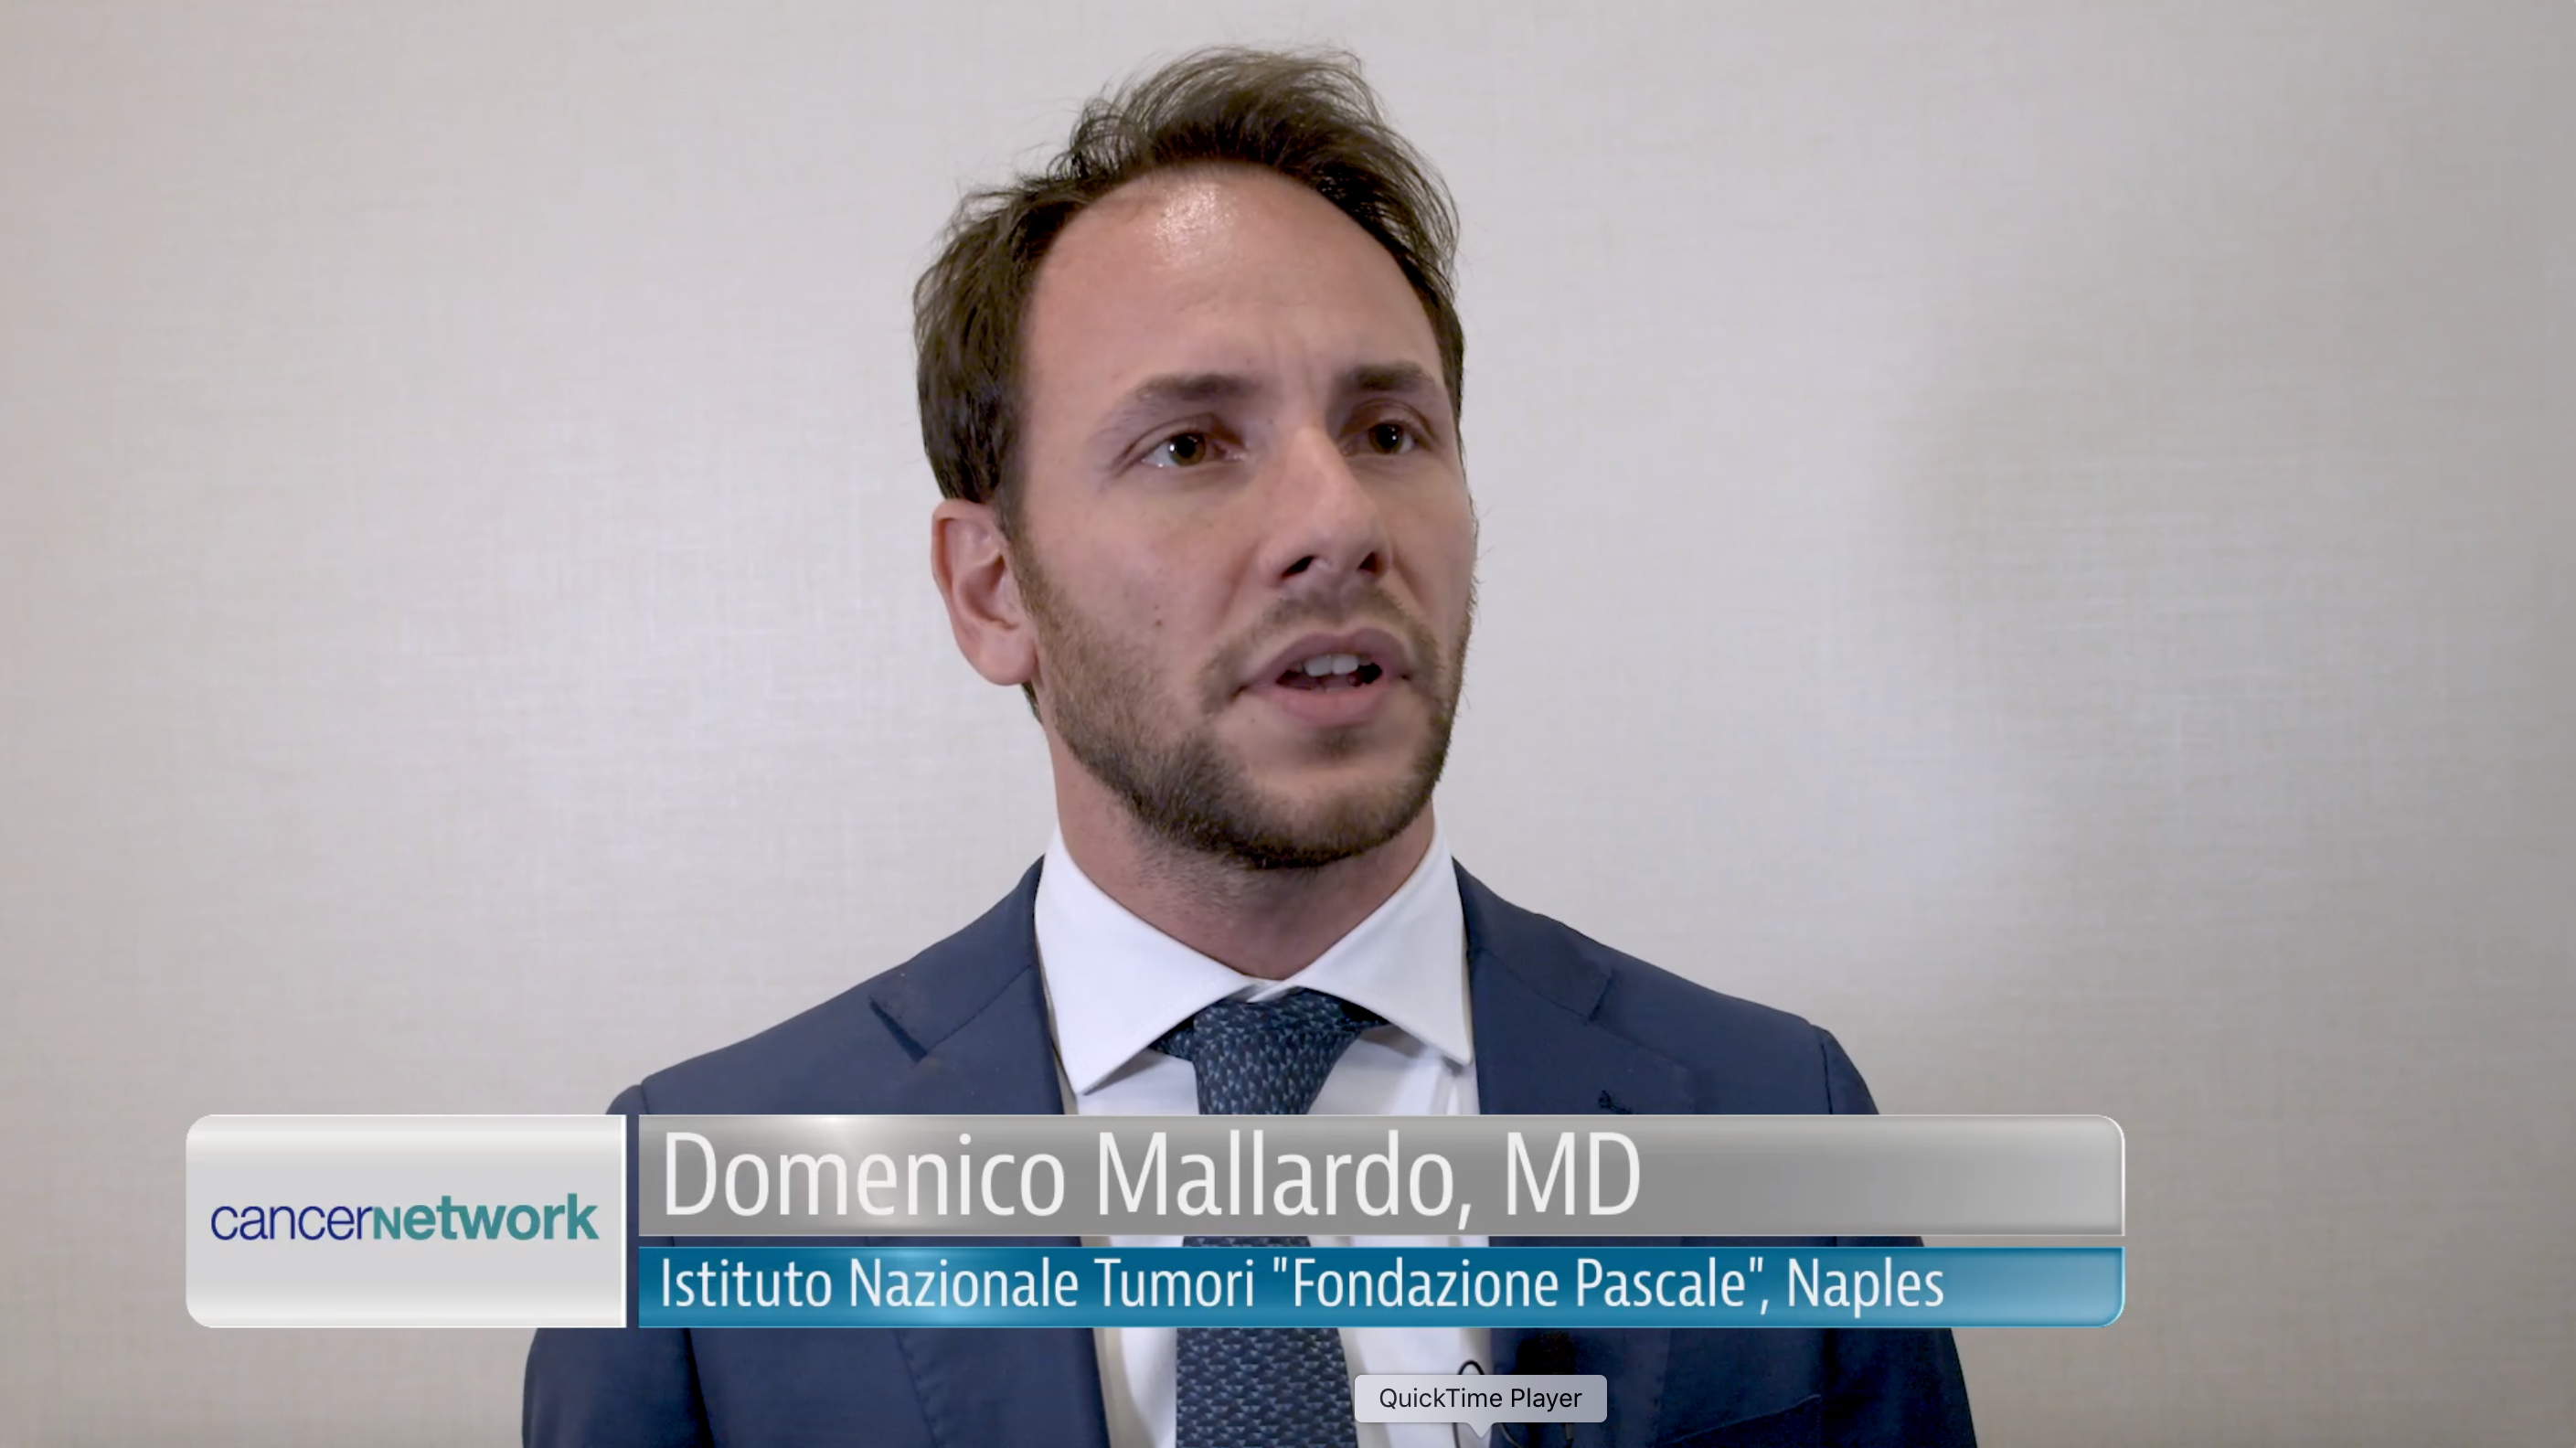 Domenico Mallardo, MD, on Anti-CTLA4 Agents in Melanoma